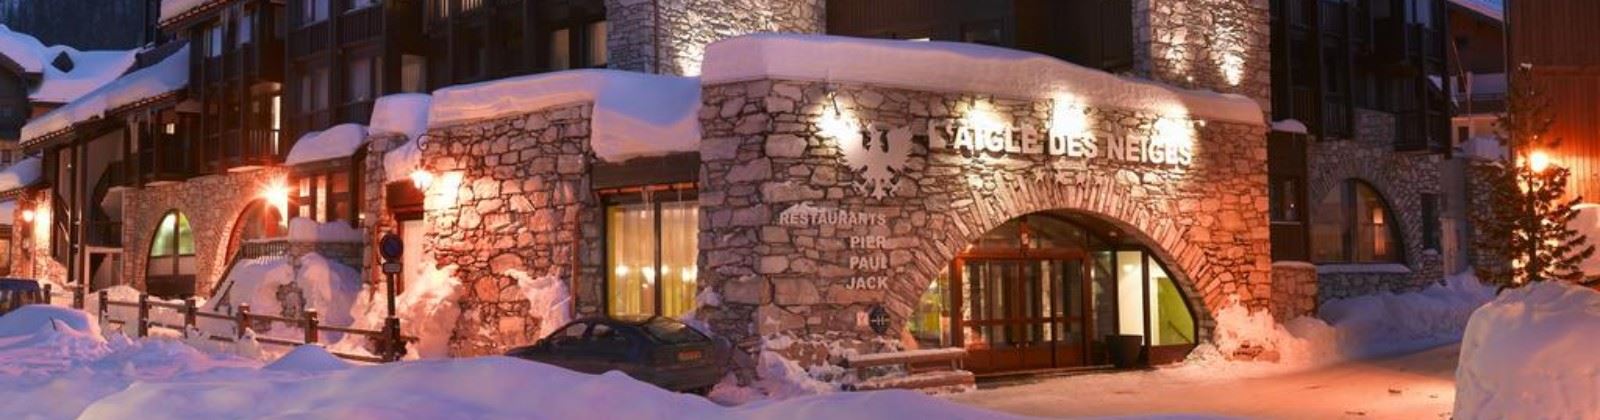 OLEVENE image - aigle-des-neiges-olevene-hotel-restaurant-salle-booking-